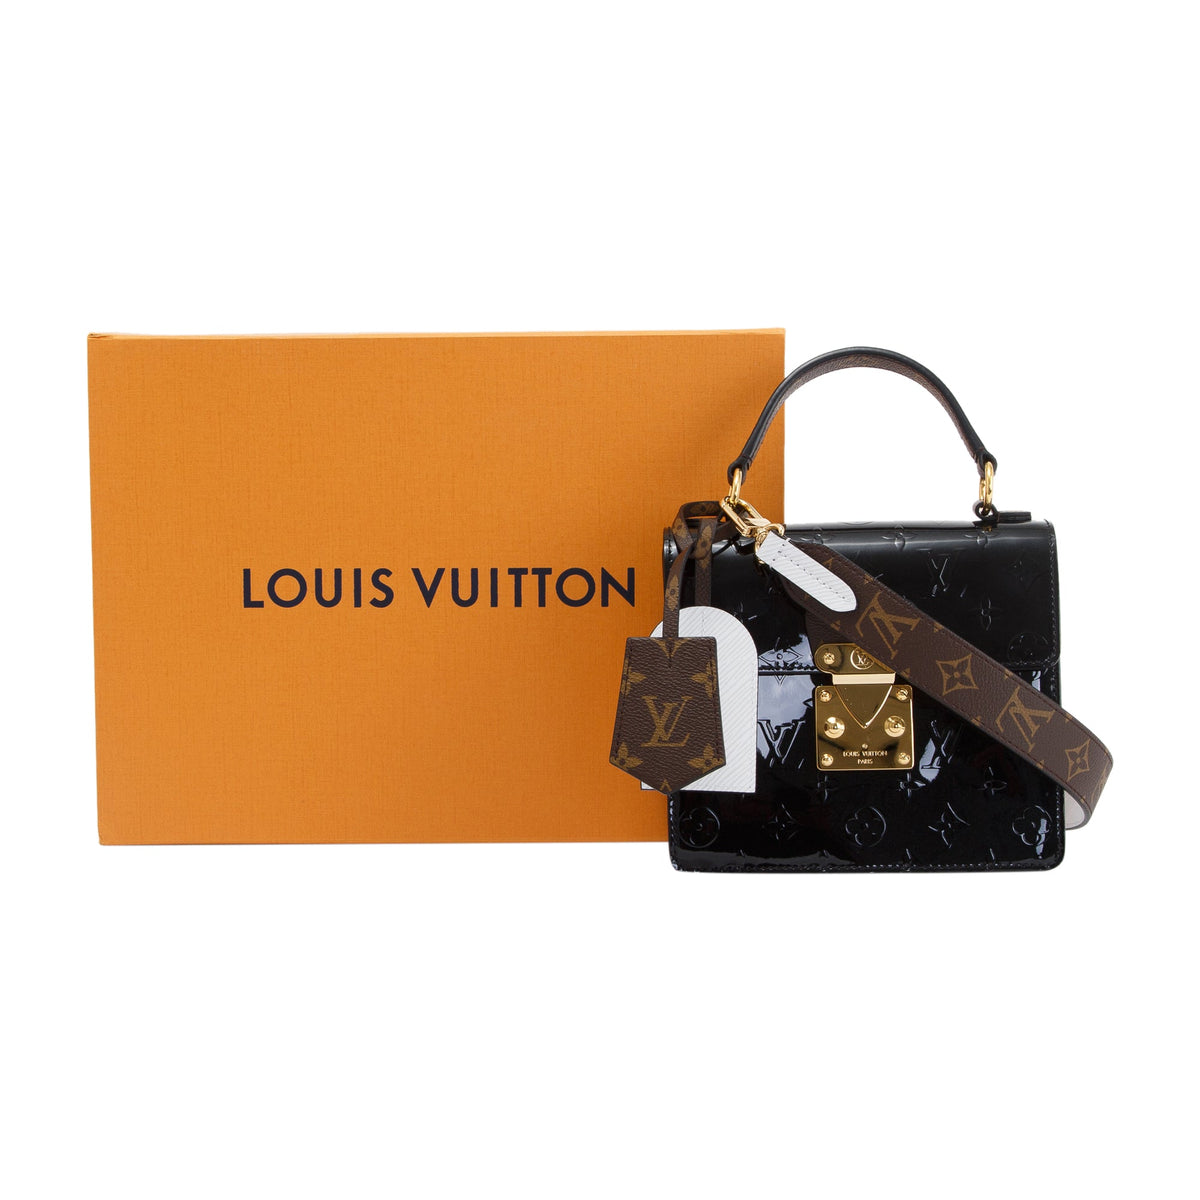 Louis Vuitton Spring Street Black